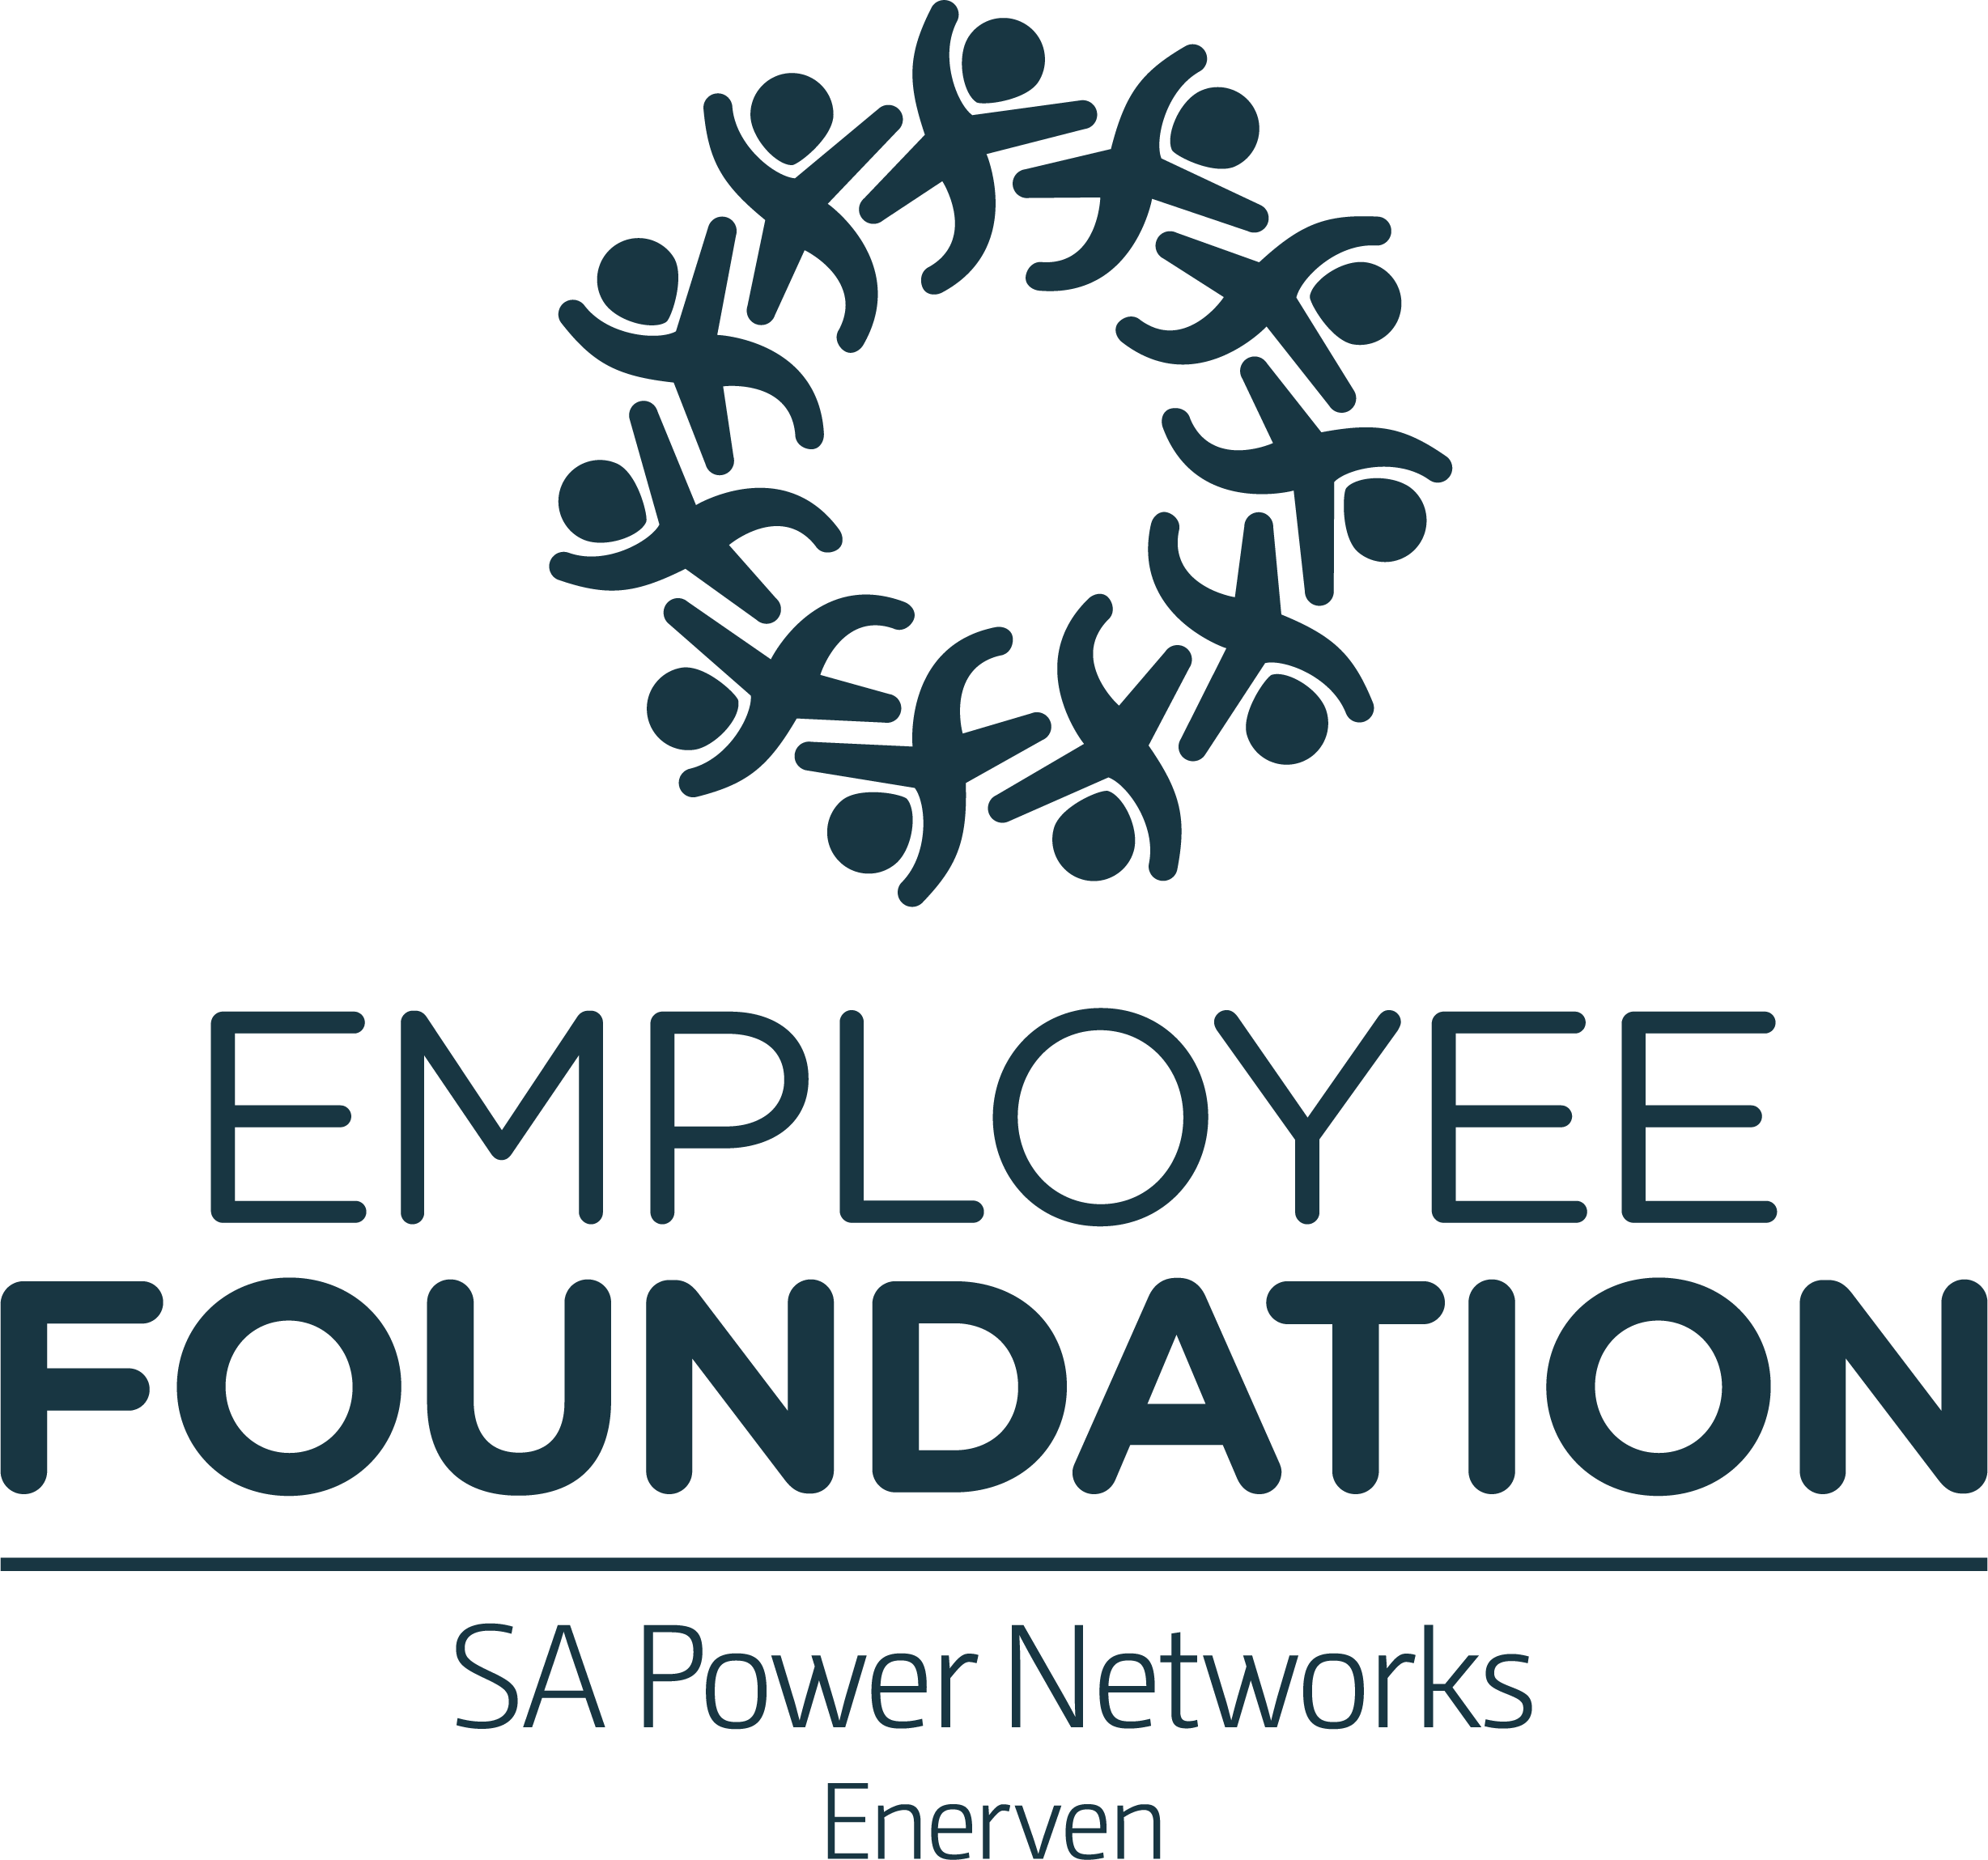 Employee Foundation new logo black and white